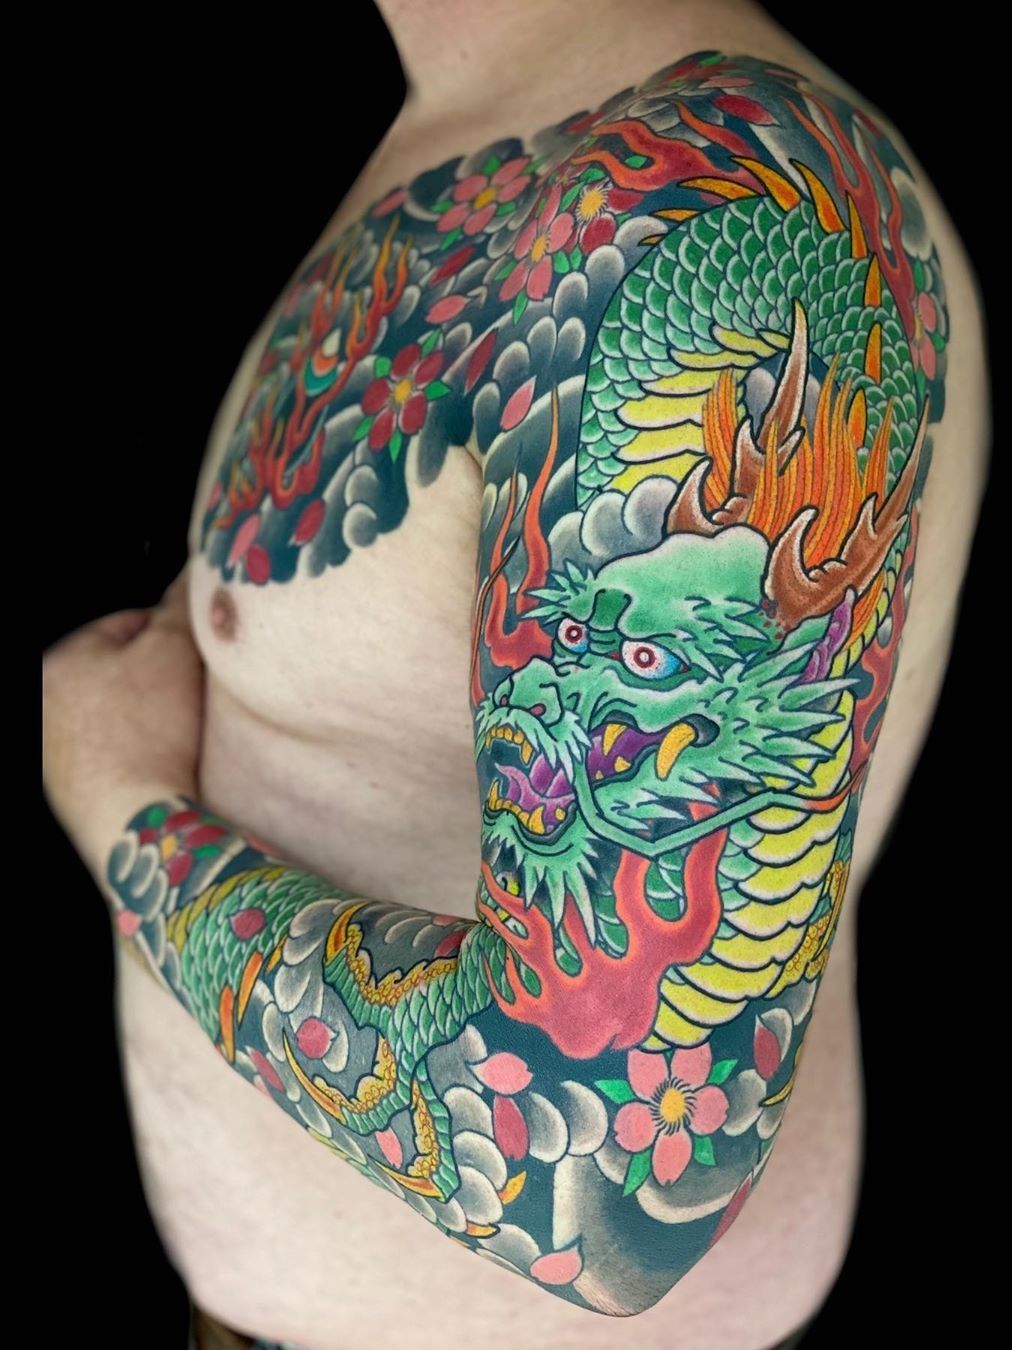 Big Dragon and Little appren.. by JonhdaStarling on DeviantArt